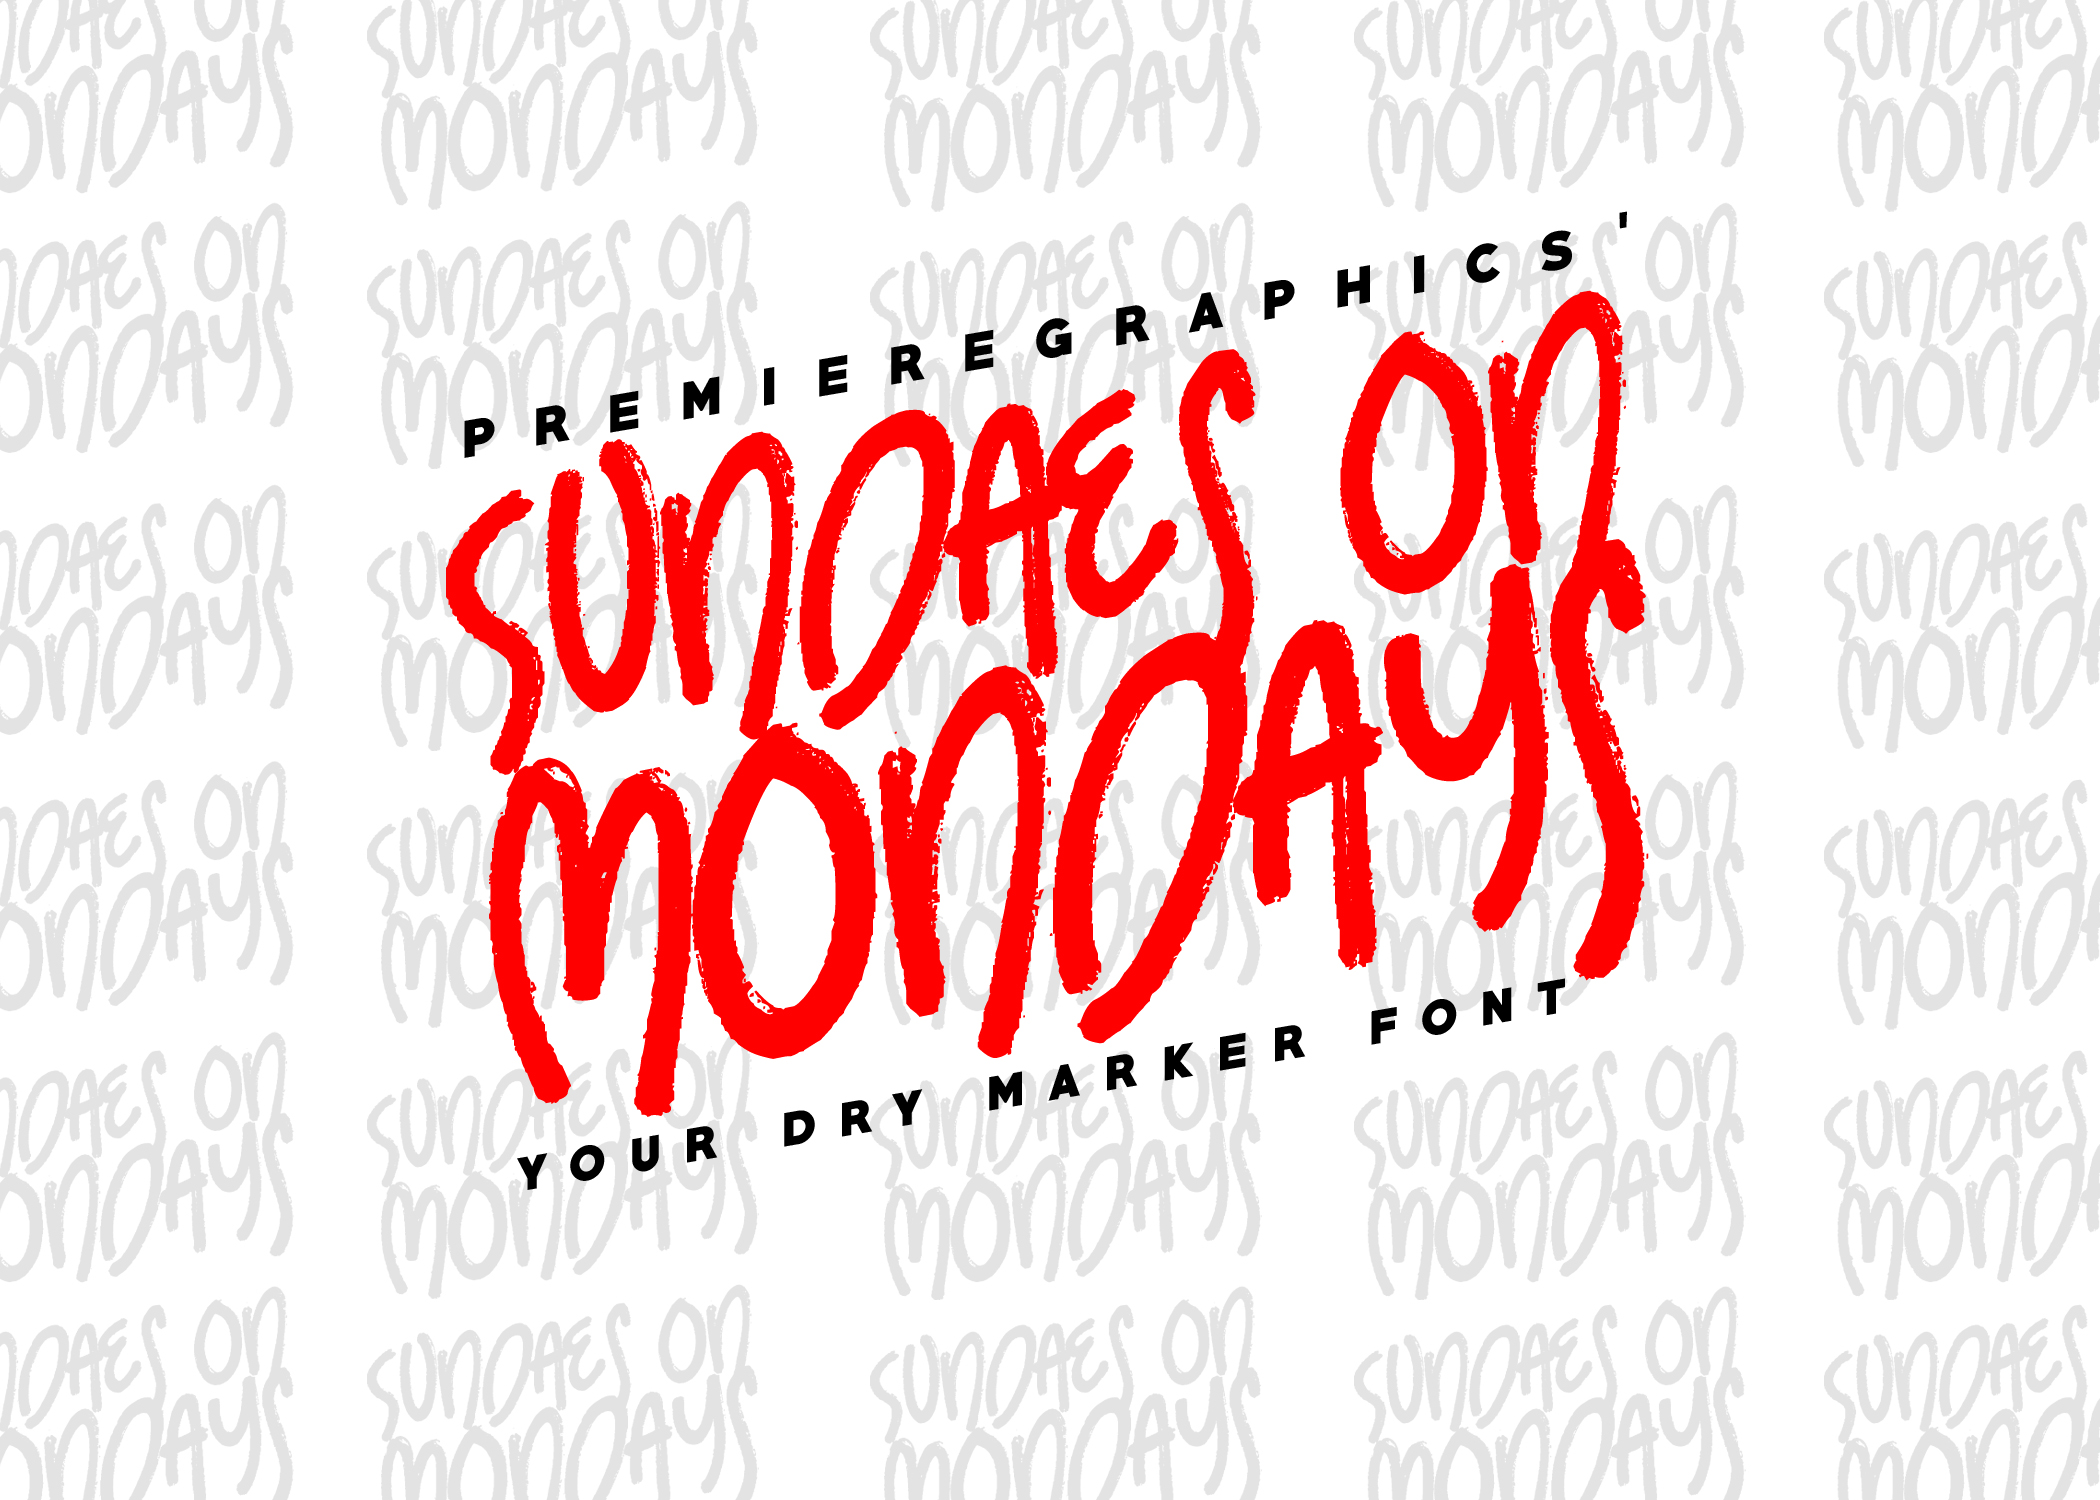 Sundaes on Mondays Font Poster 1